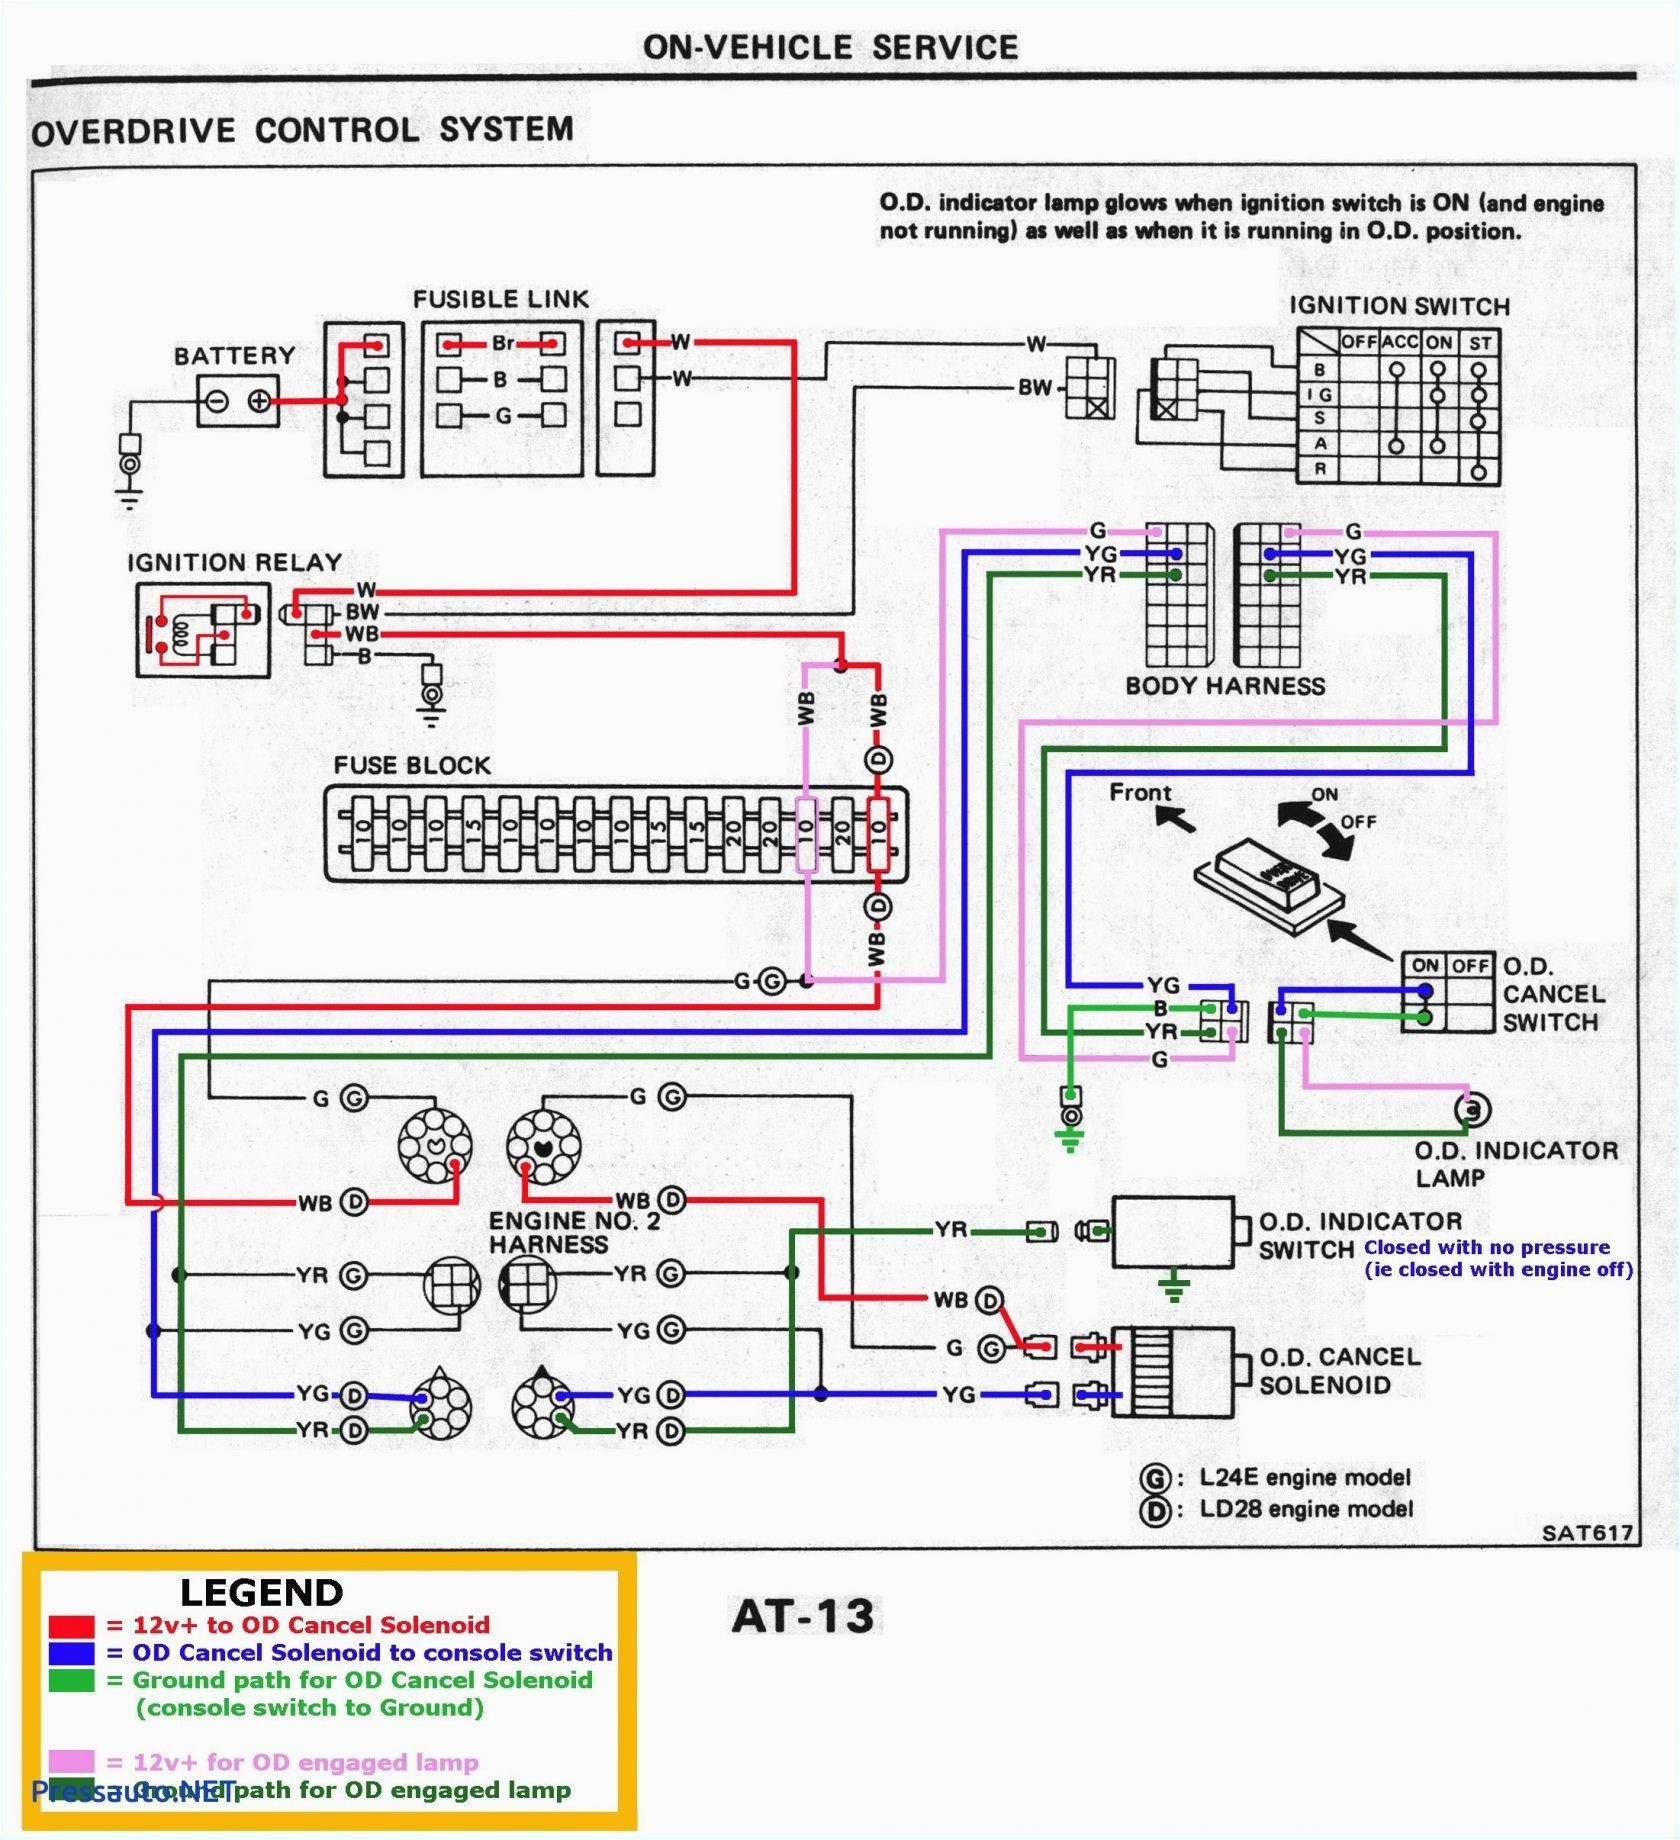 measurement circuit electricalequipmentcircuit circuit diagram led light bulb circuit diagram http wwwseekiccom circuitdiagram